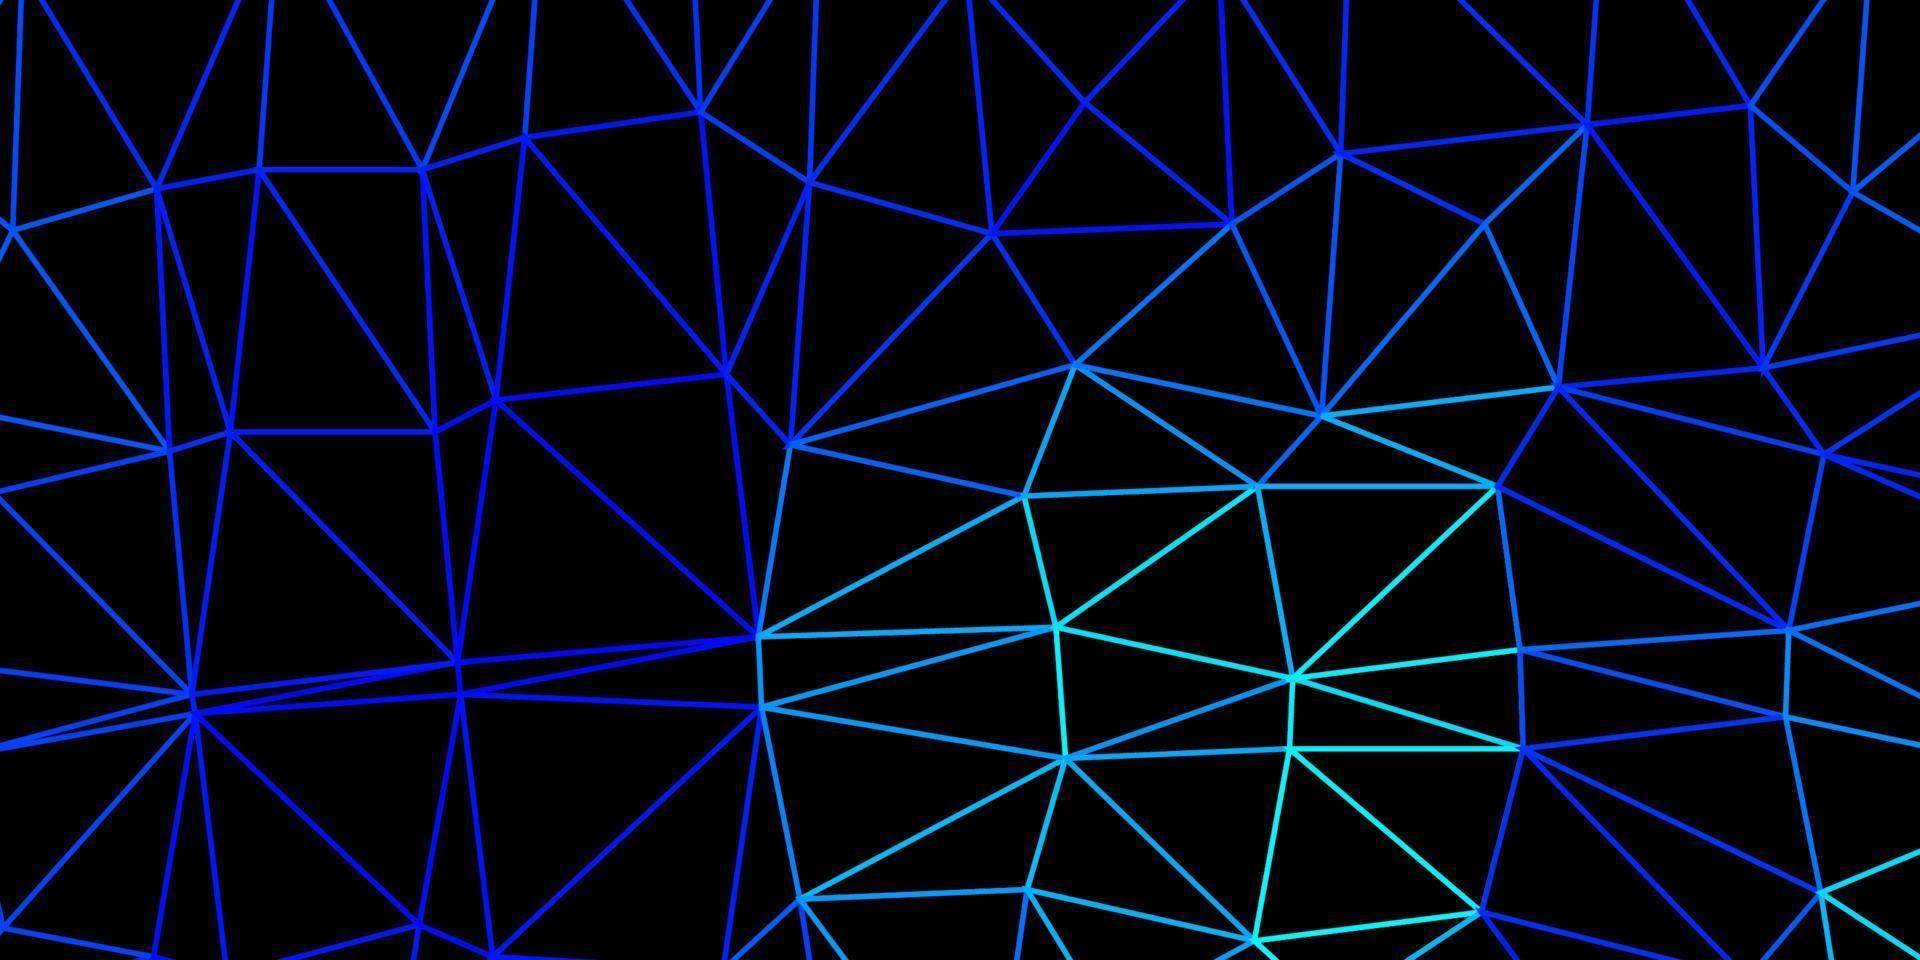 diseño poligonal geométrico vector azul claro.